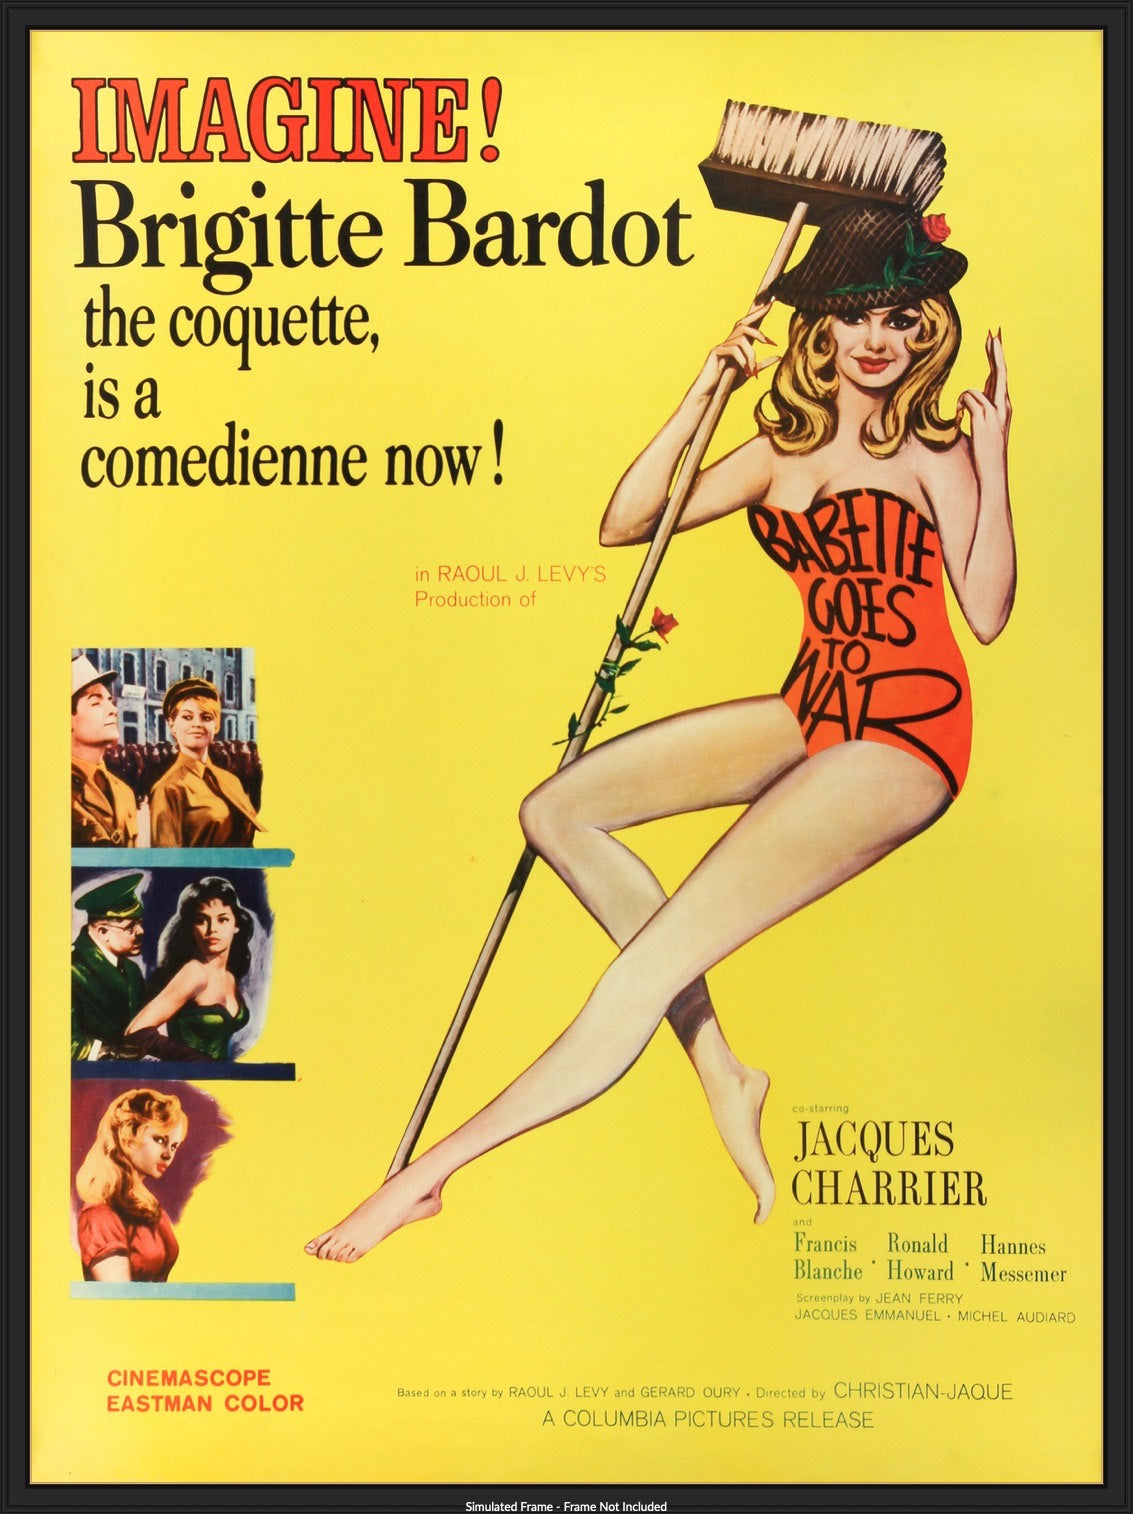 Babette Goes to War (1959) original movie poster for sale at Original Film Art